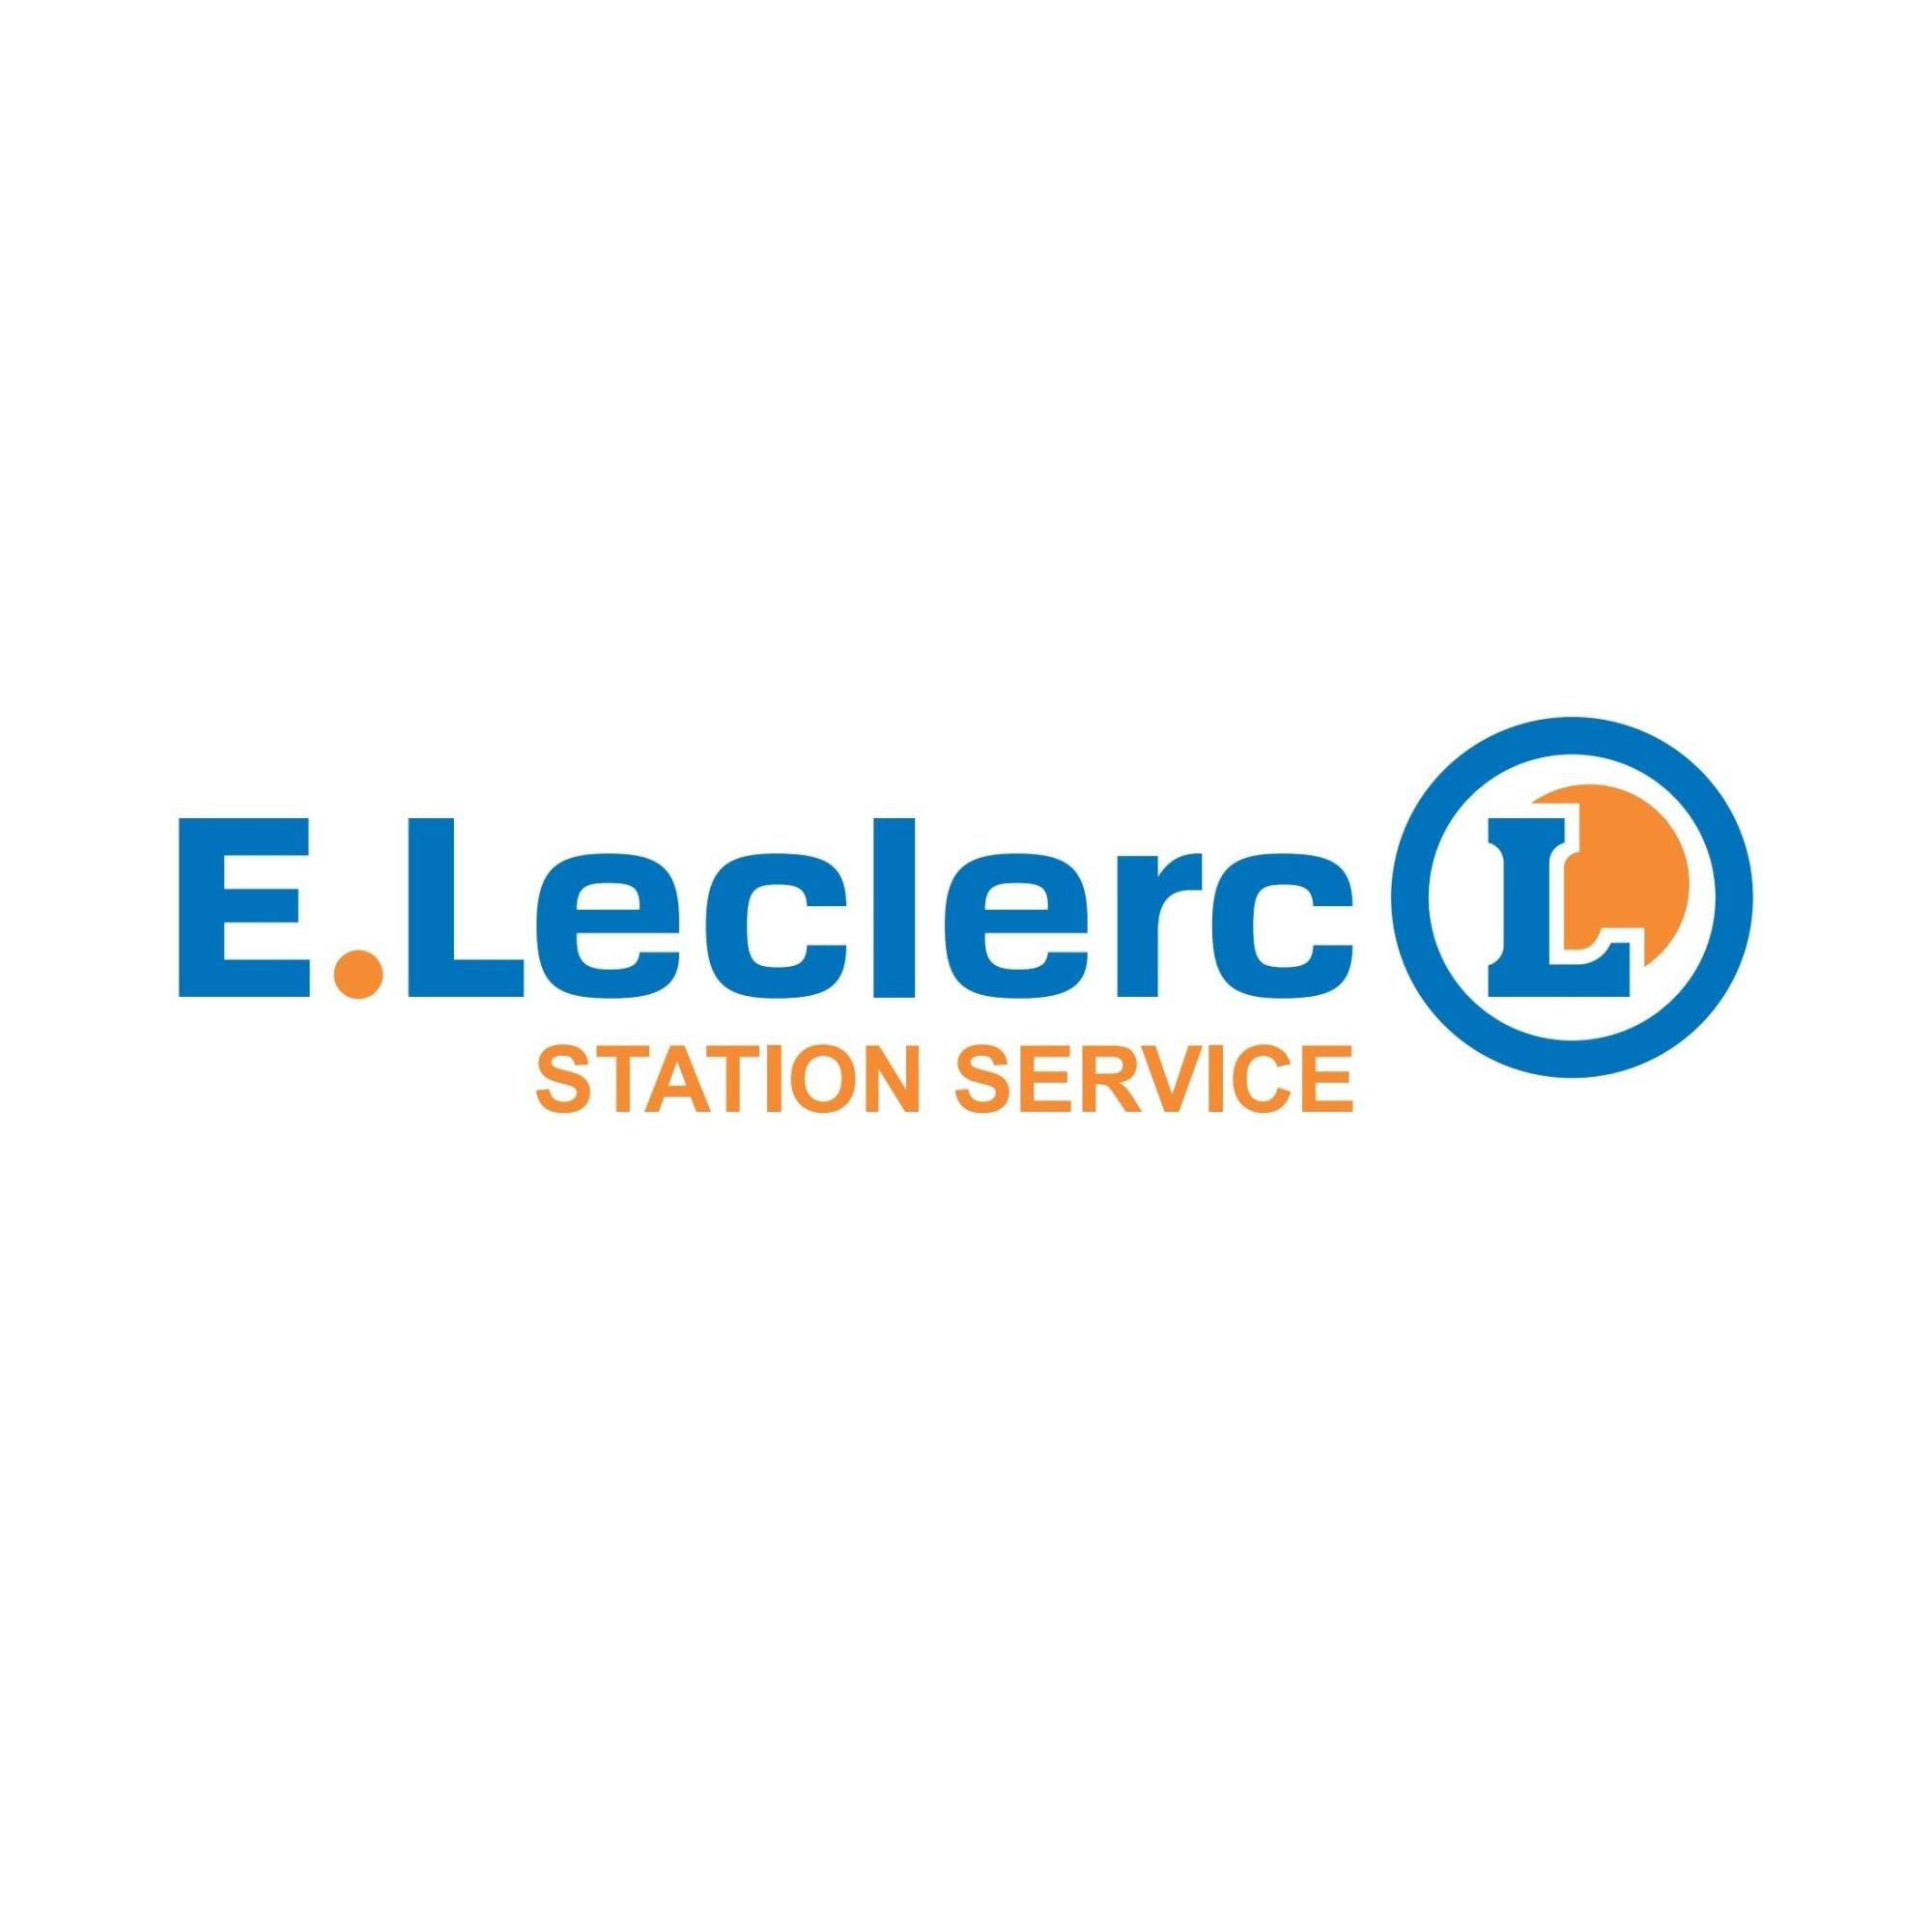 E.leclerc Station Service Narbonne